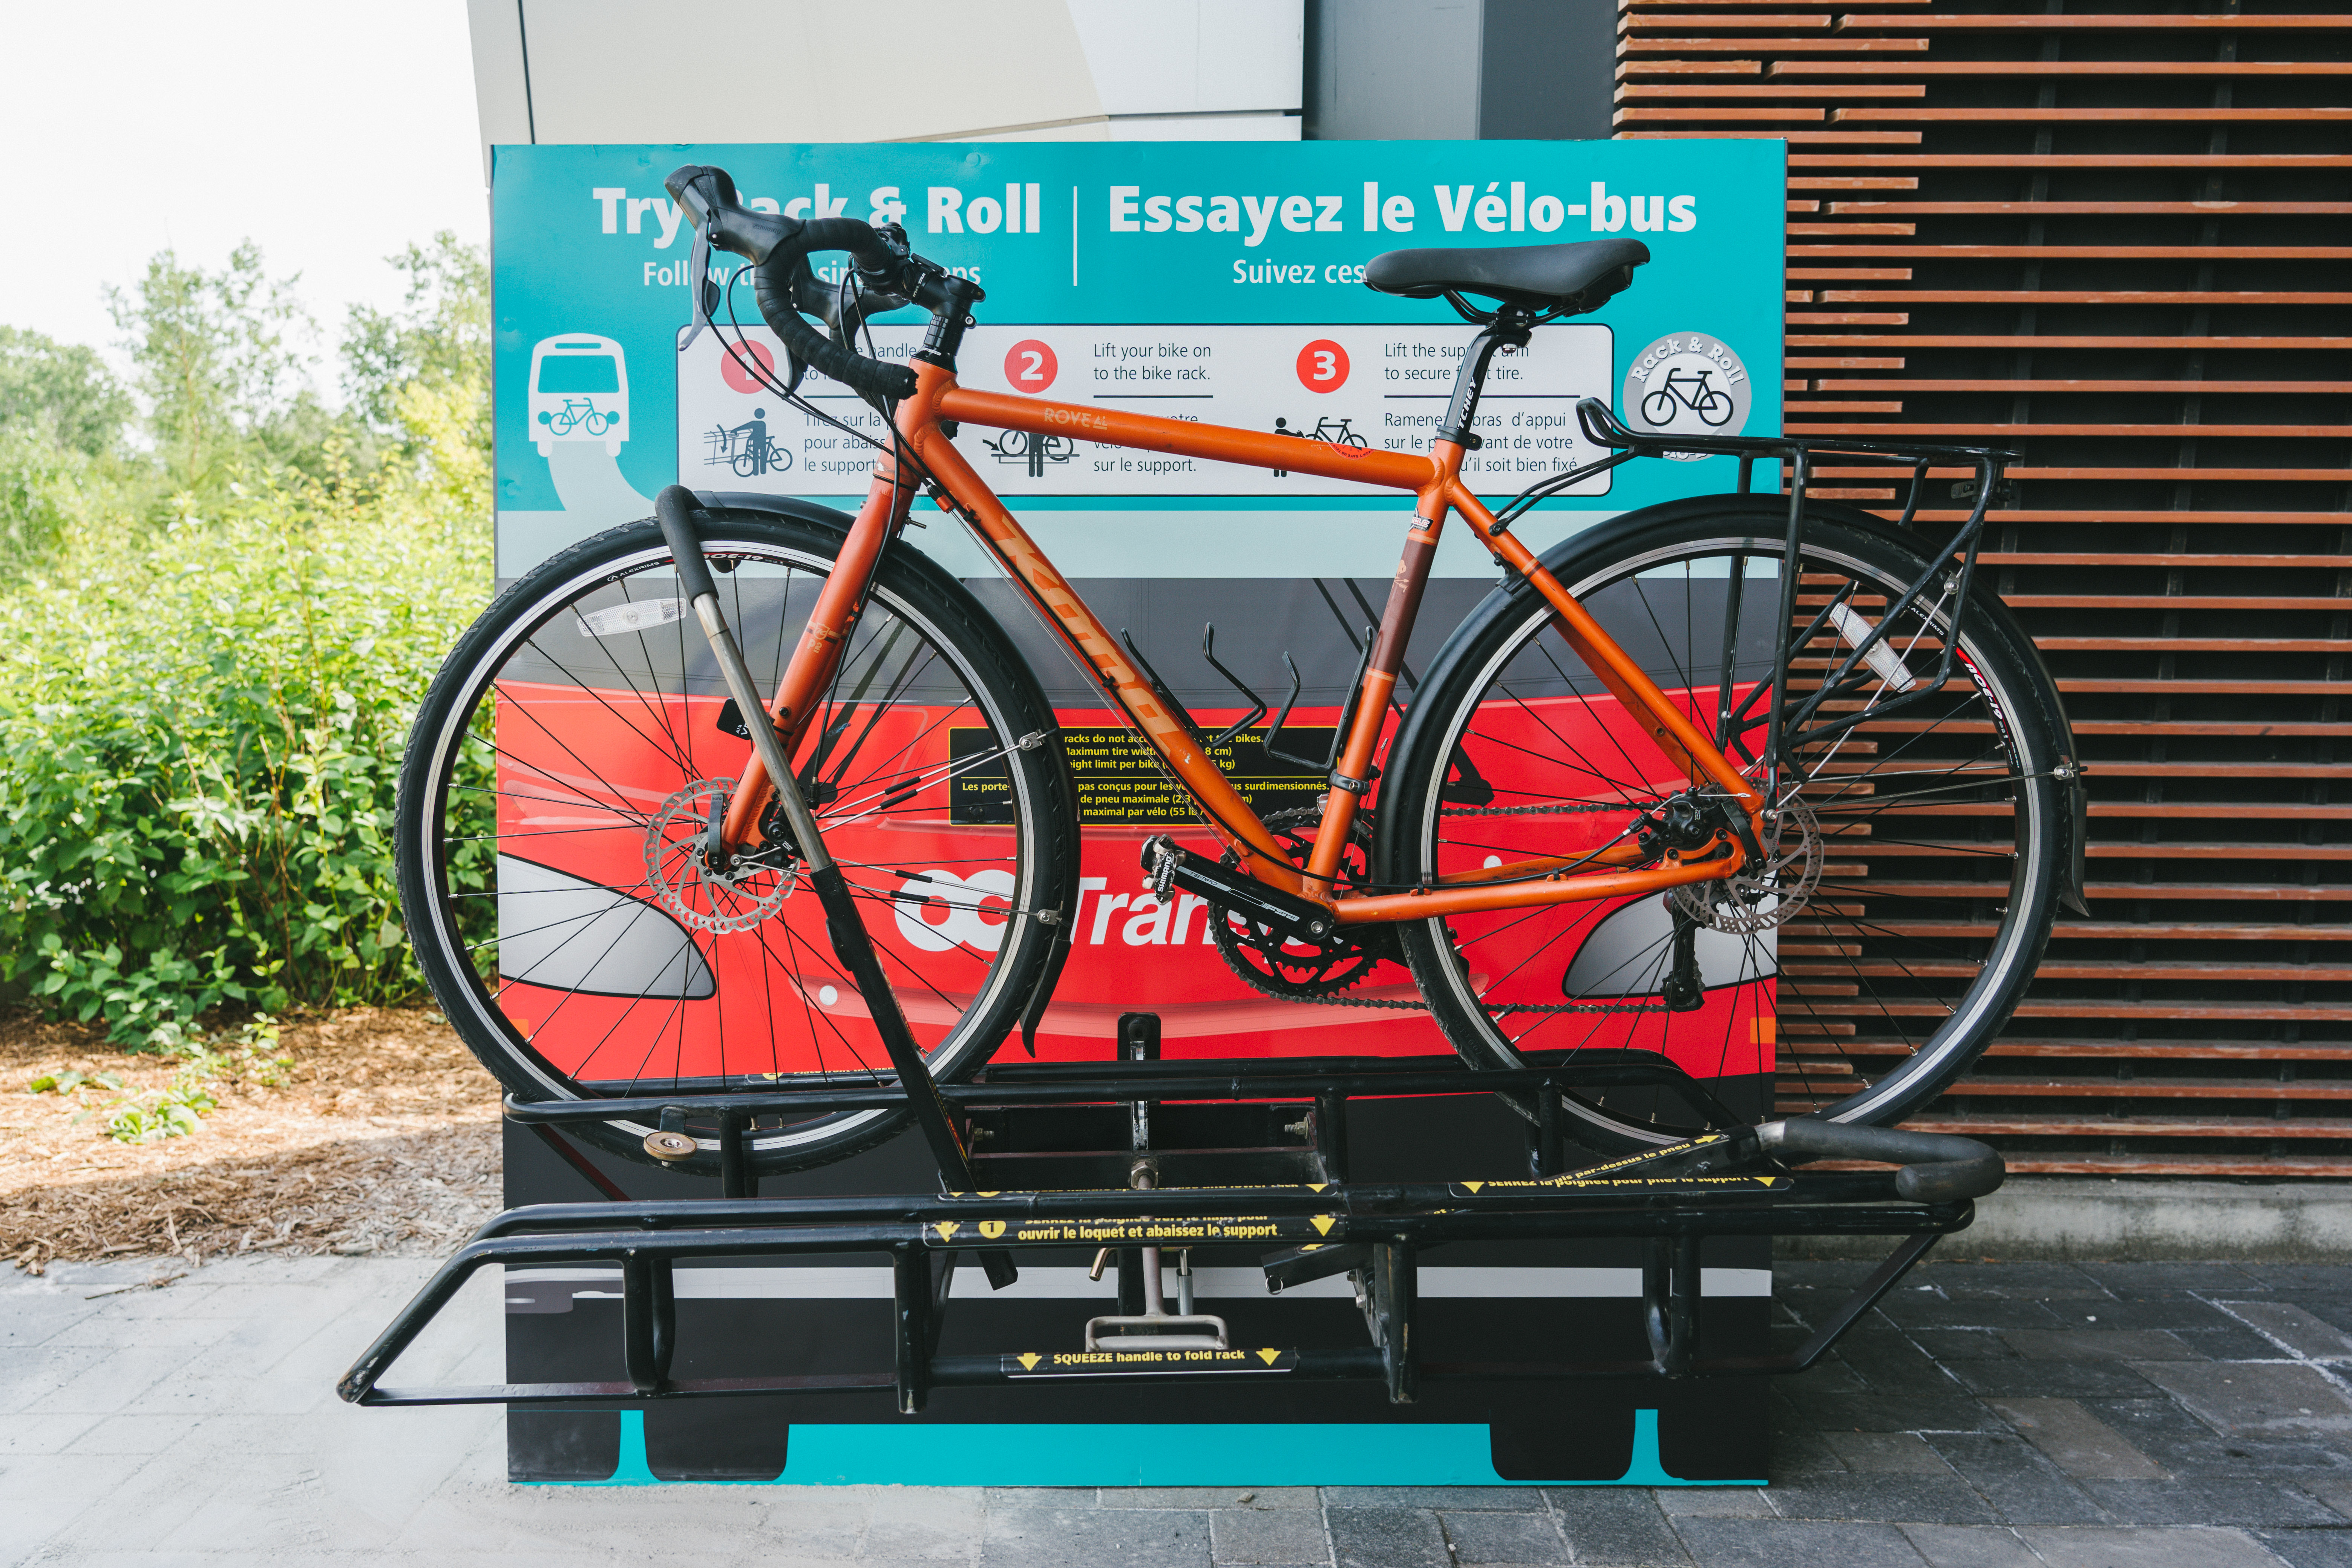 Image - New Rack & Roll practice bike rack at Hurdman Station